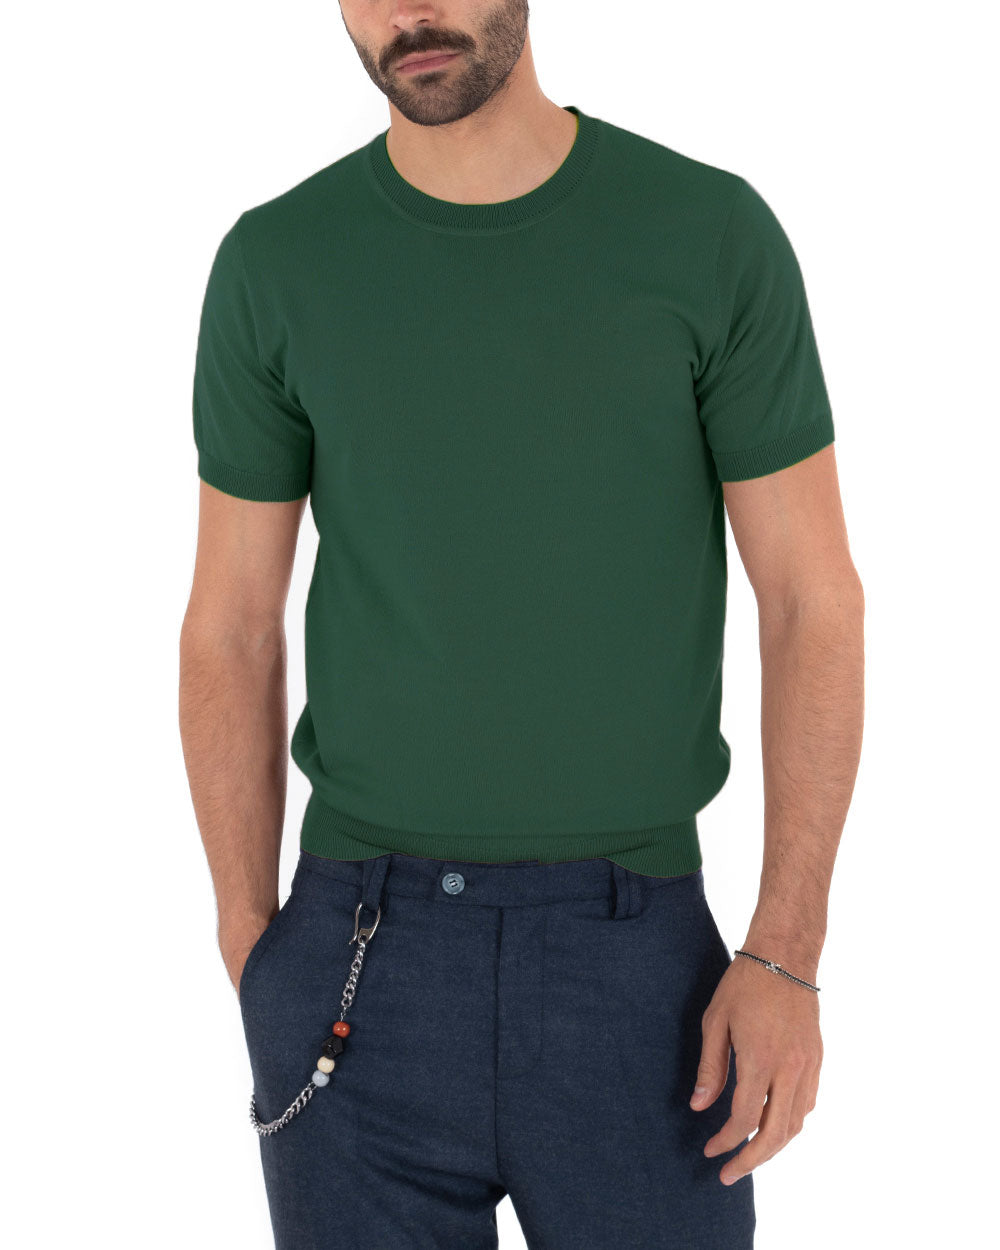 T-Shirt Uomo Manica Corta Tinta Unita Verde Bottiglia Girocollo Filo Casual GIOSAL-TS3051A